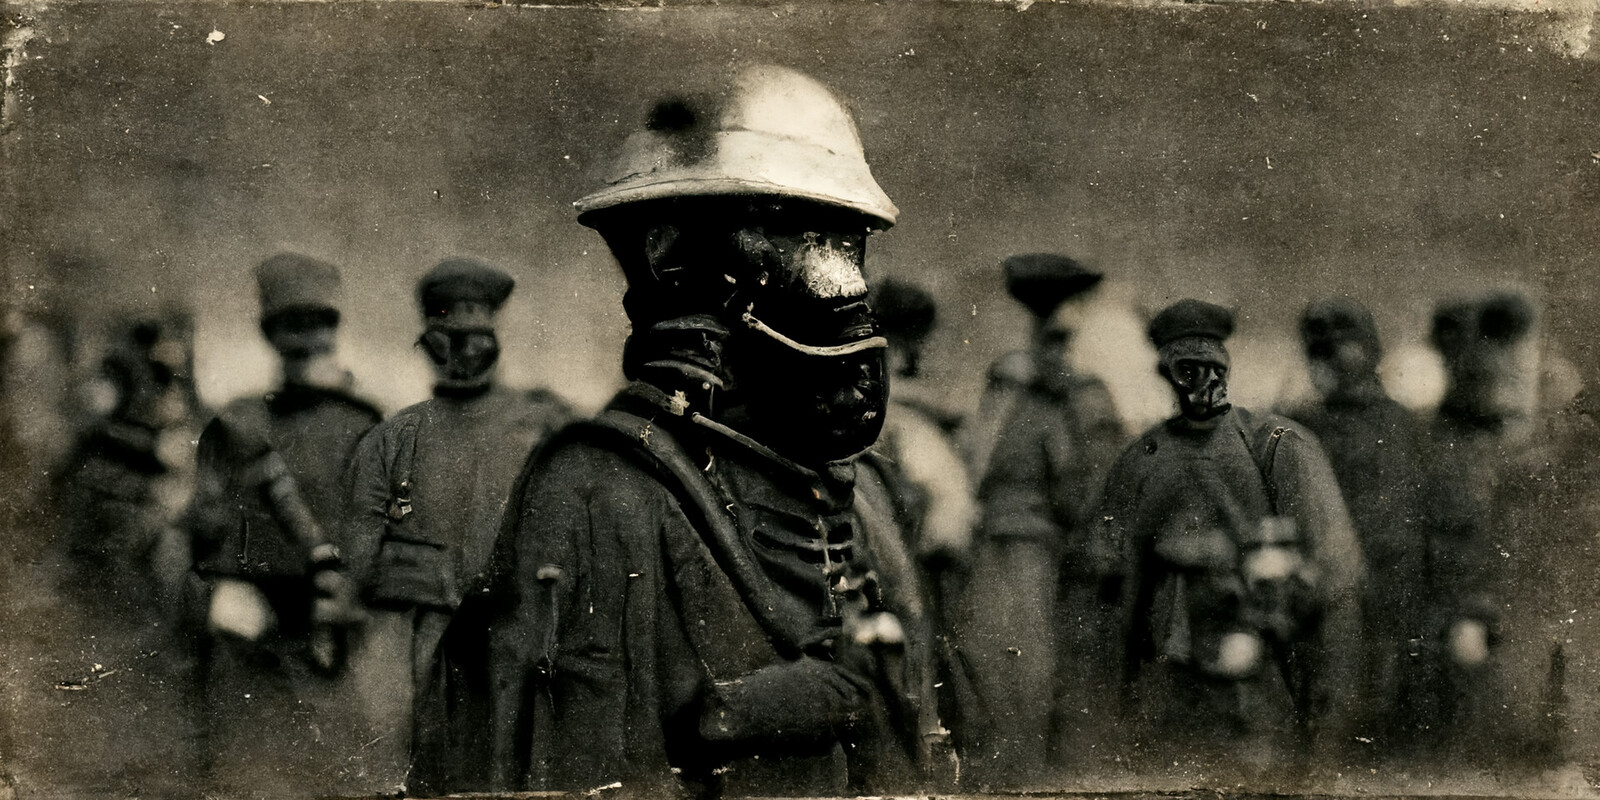 Conscripts
c.1888
Photograph